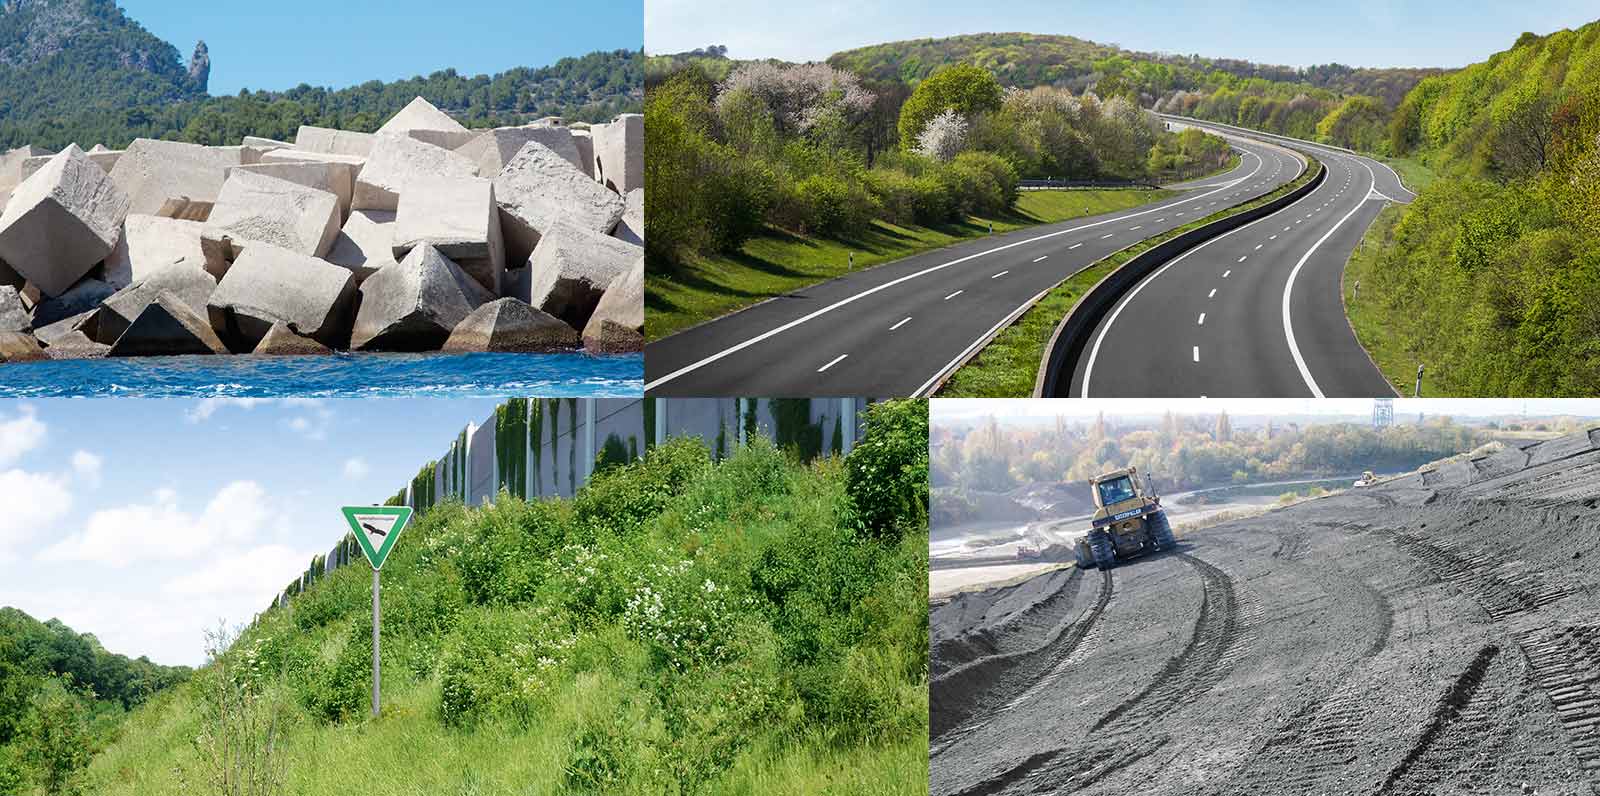 Fields of application for incinerator bottom ash include roads, earthworks, landfills, asphalt and concrete